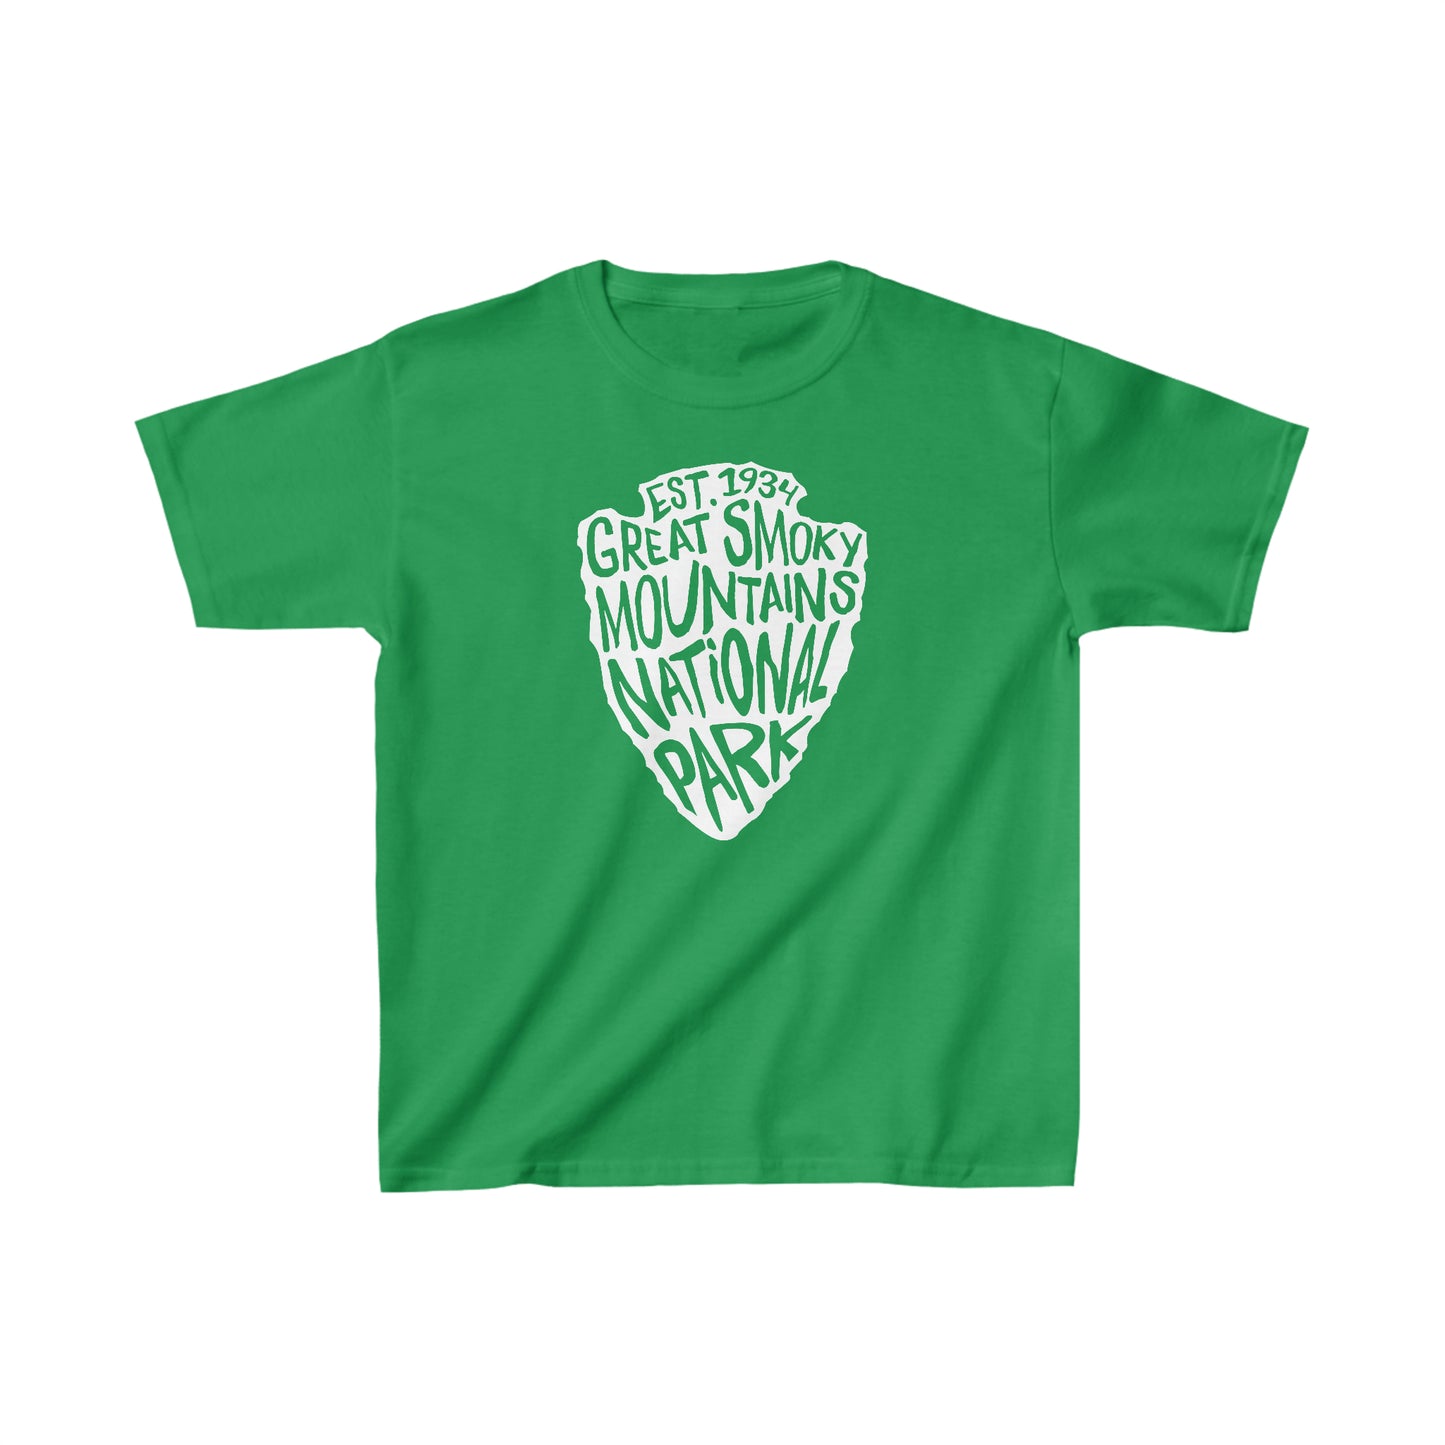 Great Smoky Mountains National Park Child T-Shirt - Arrowhead Design